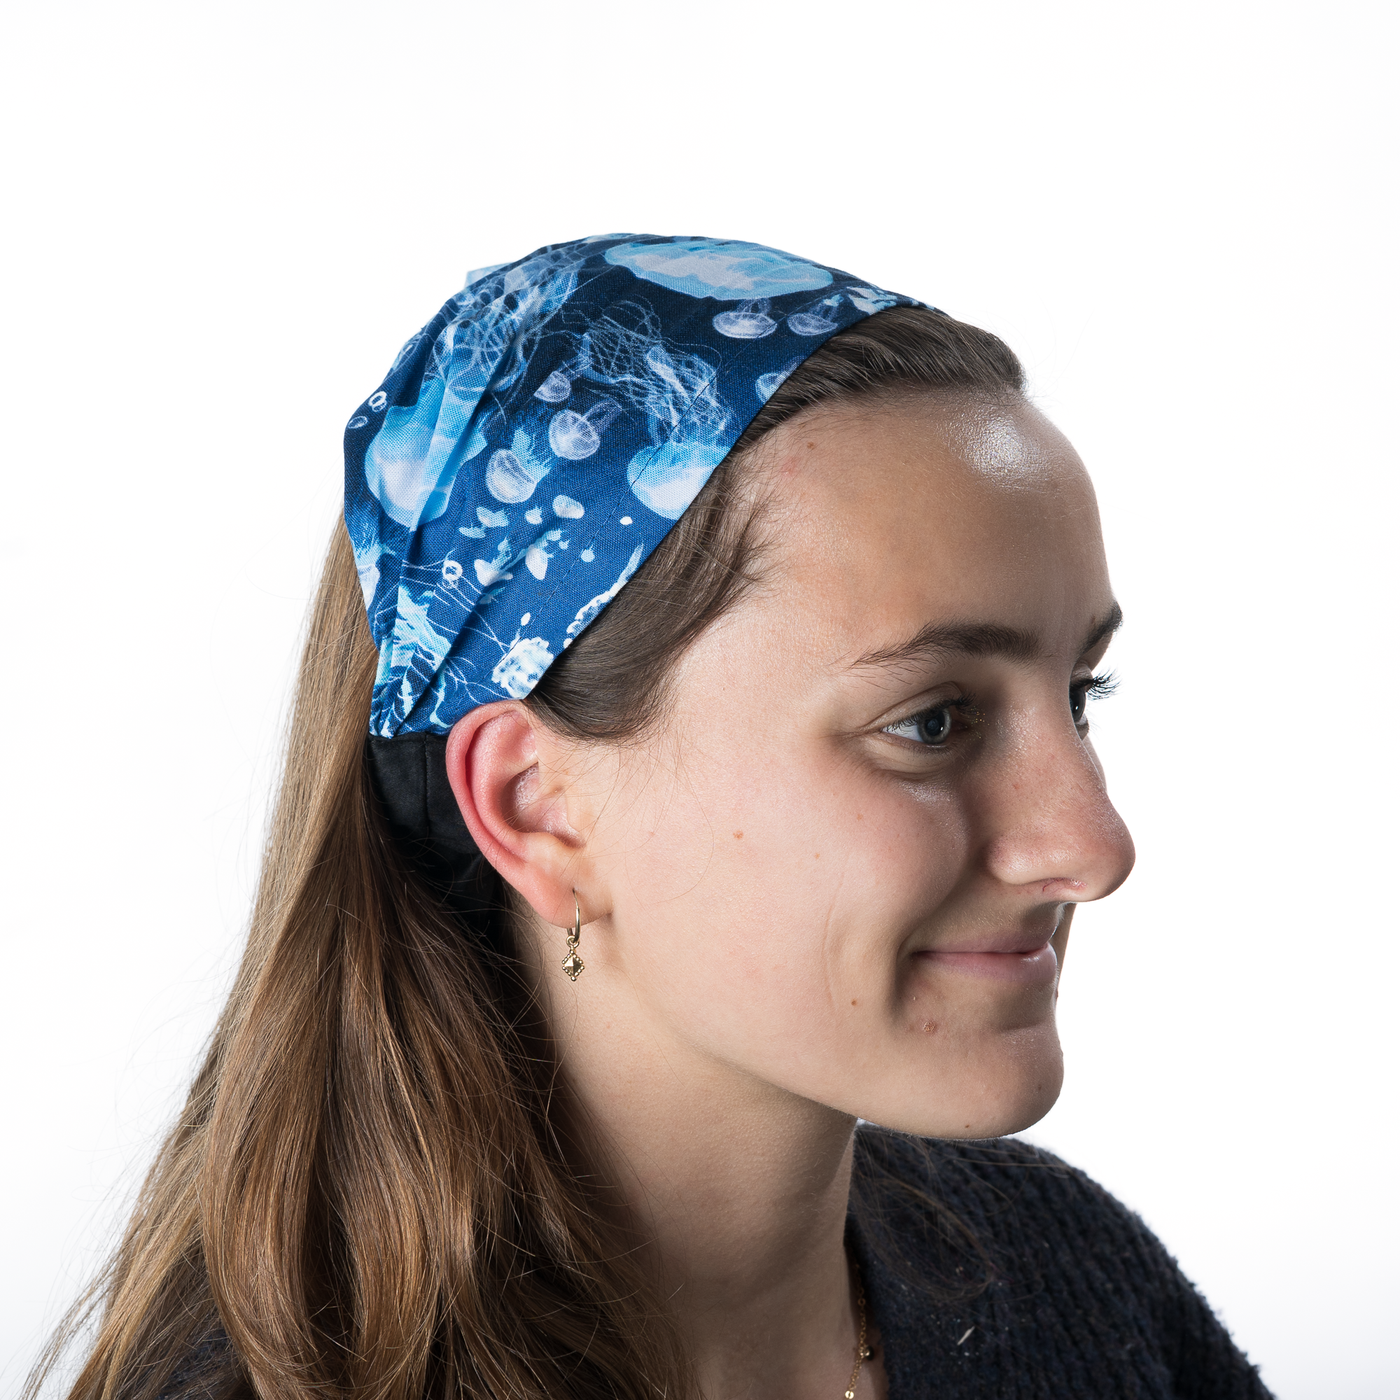 Jellyfish Headband ~ Handmade from 100% cotton